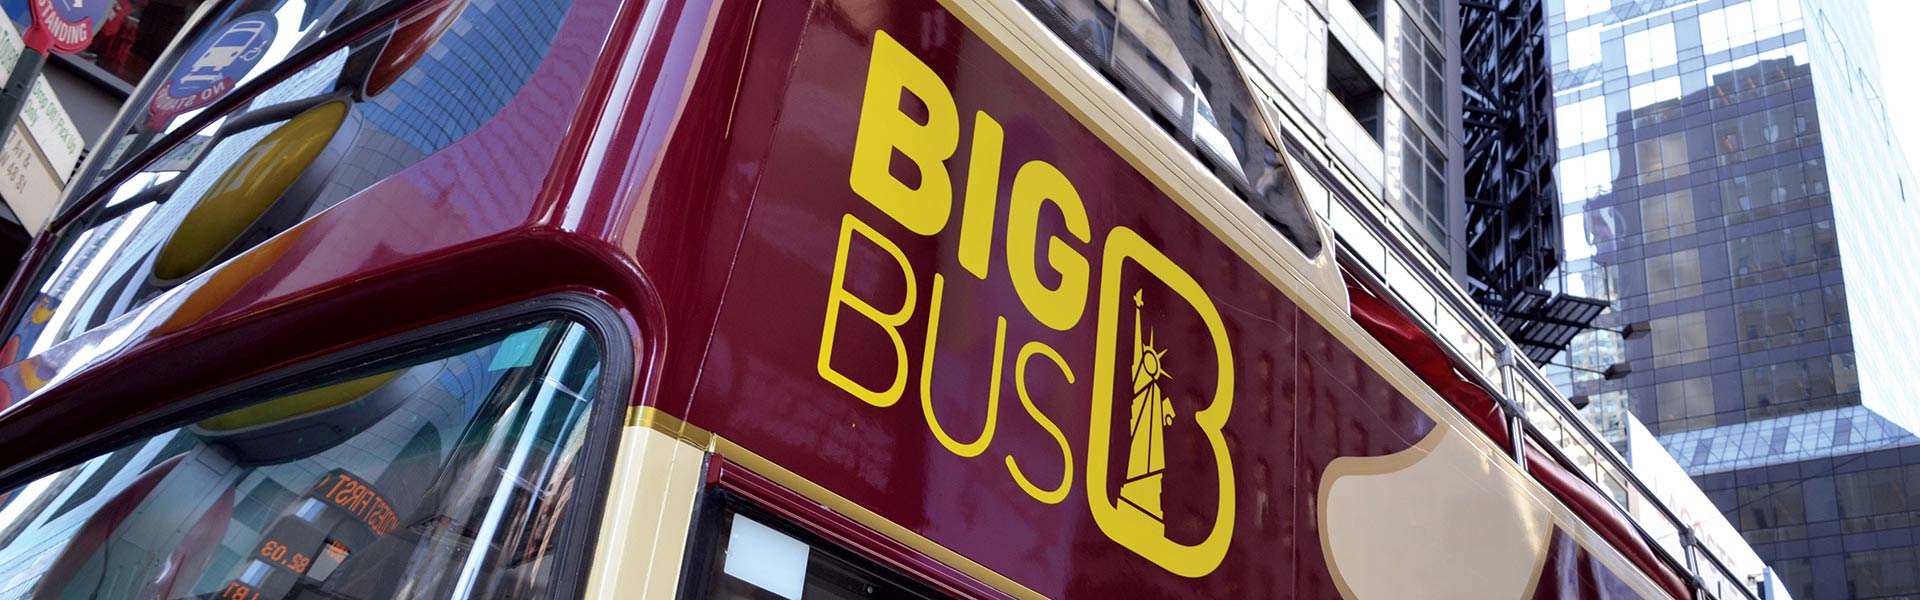 Big Bus open-top tour of New York